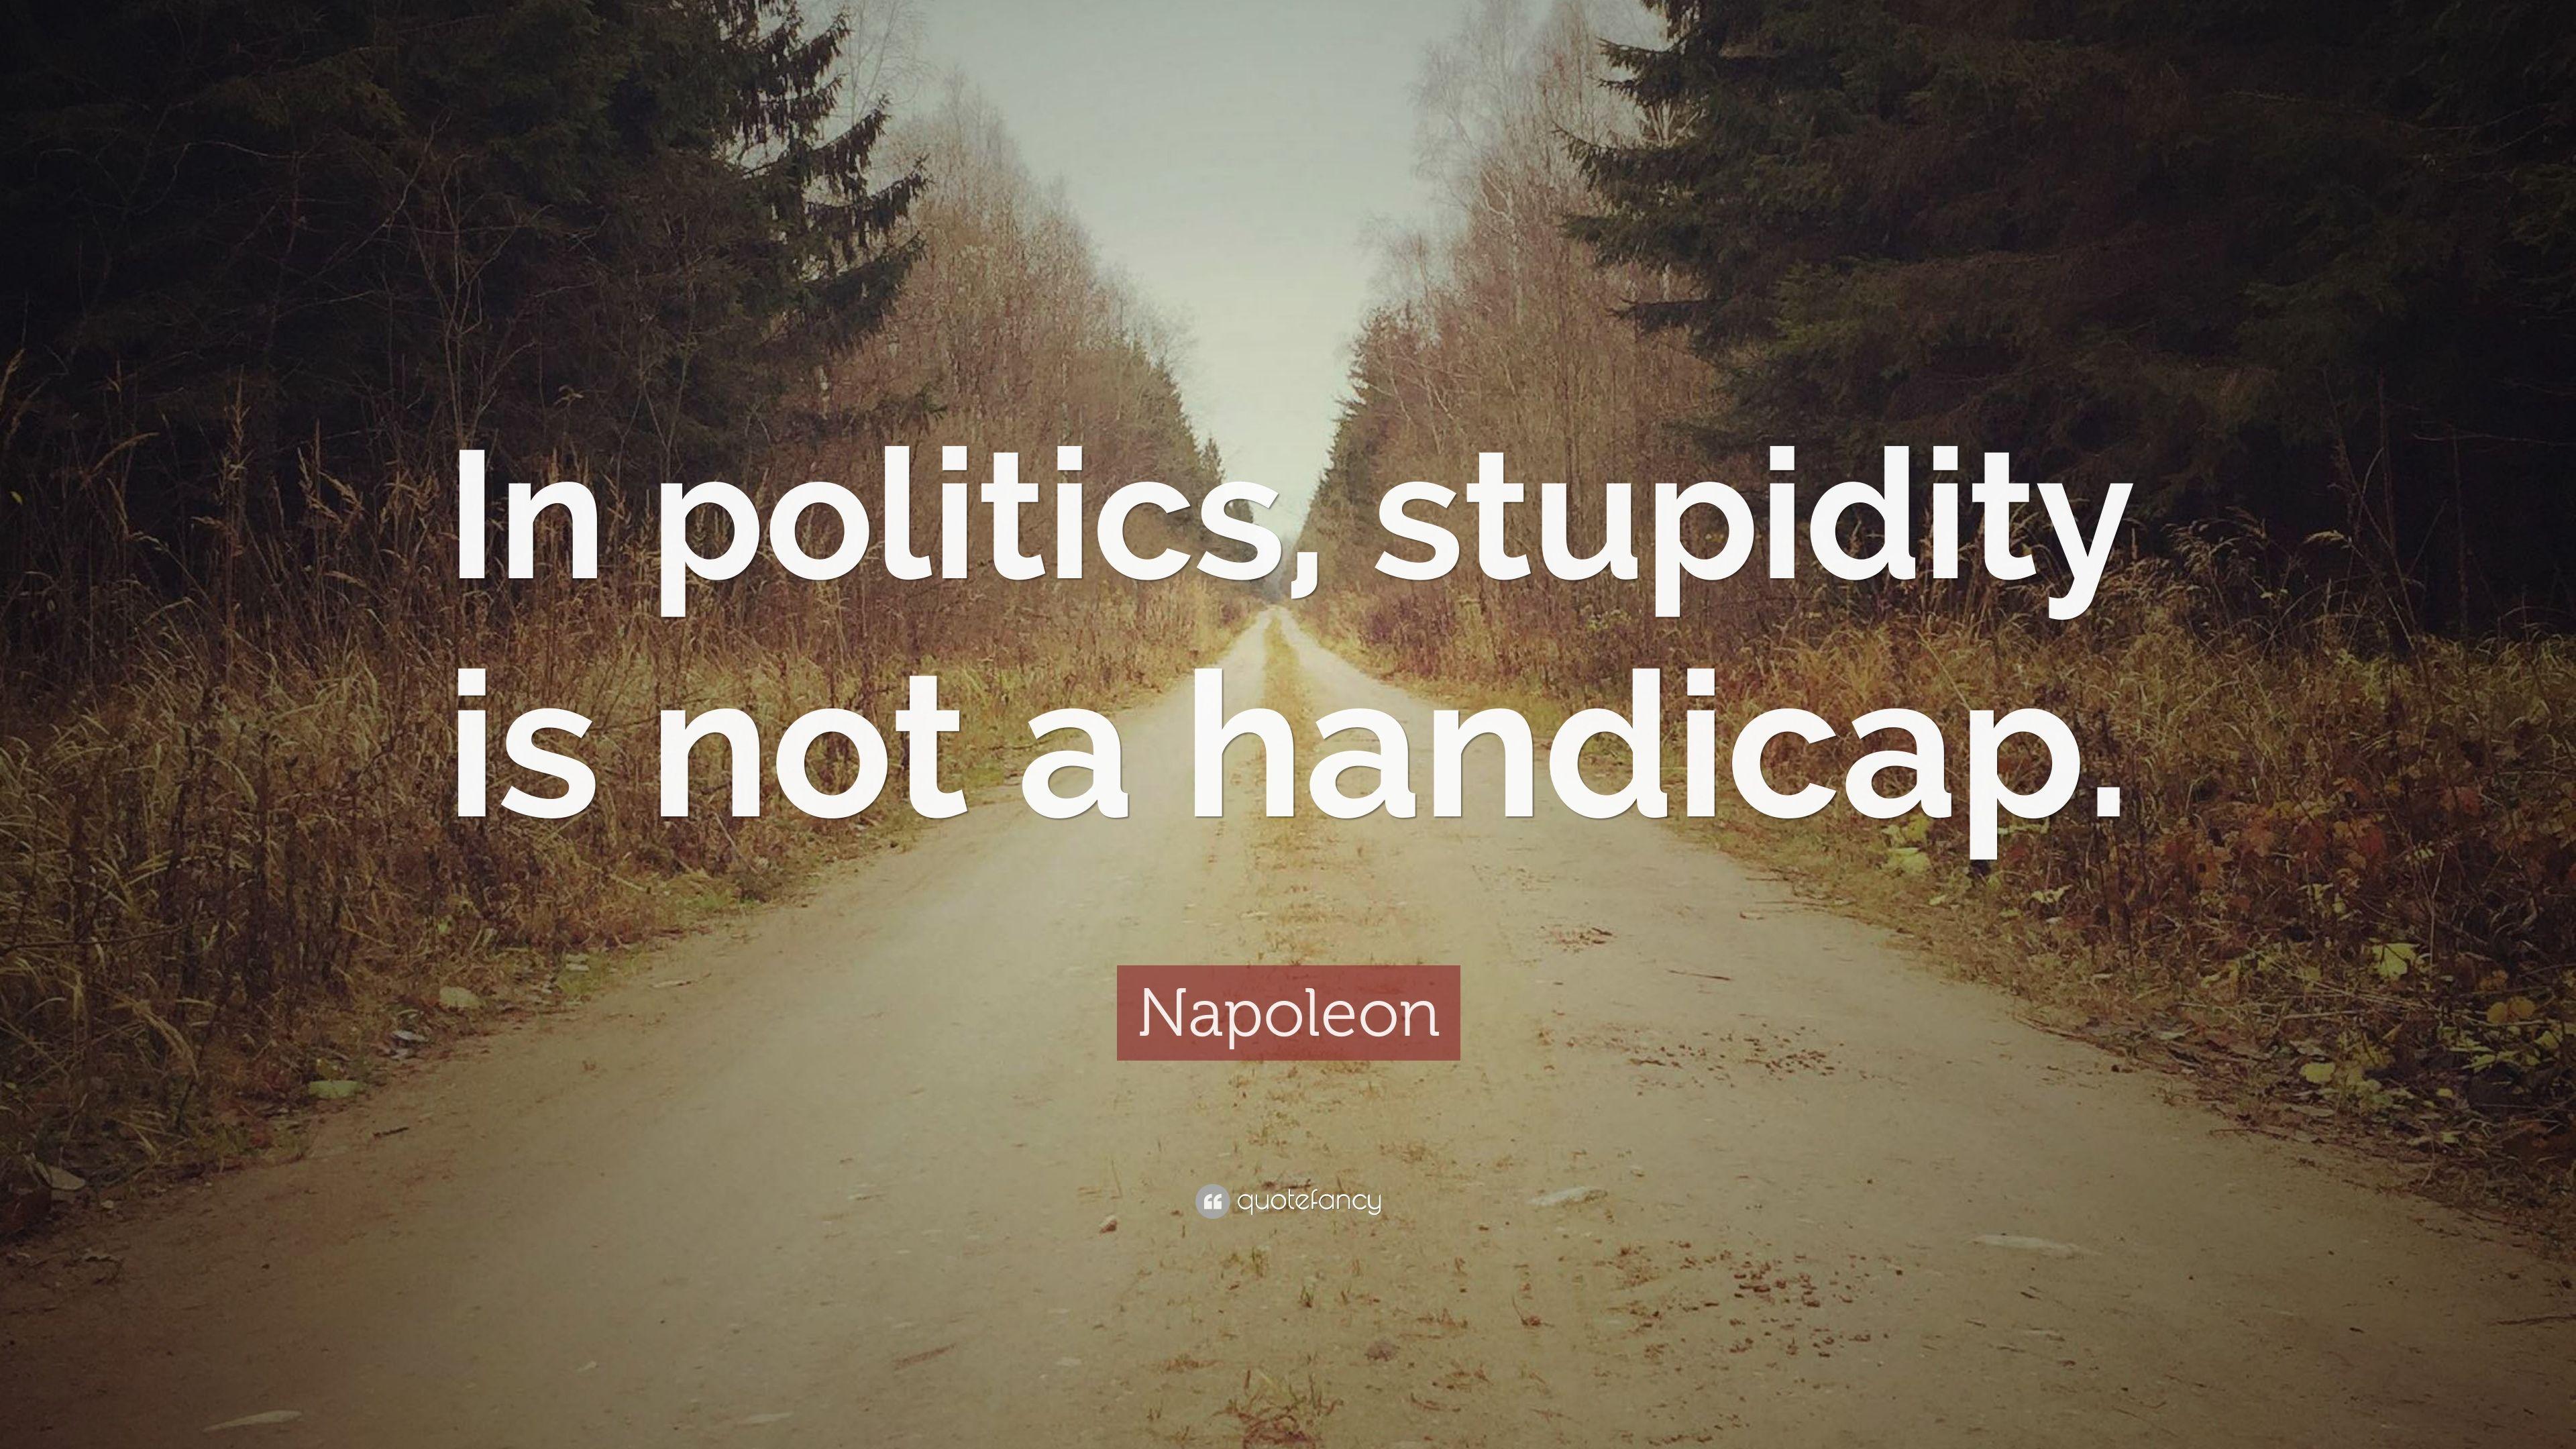 Napoleon Quote: “In politics, stupidity is not a handicap.” 12